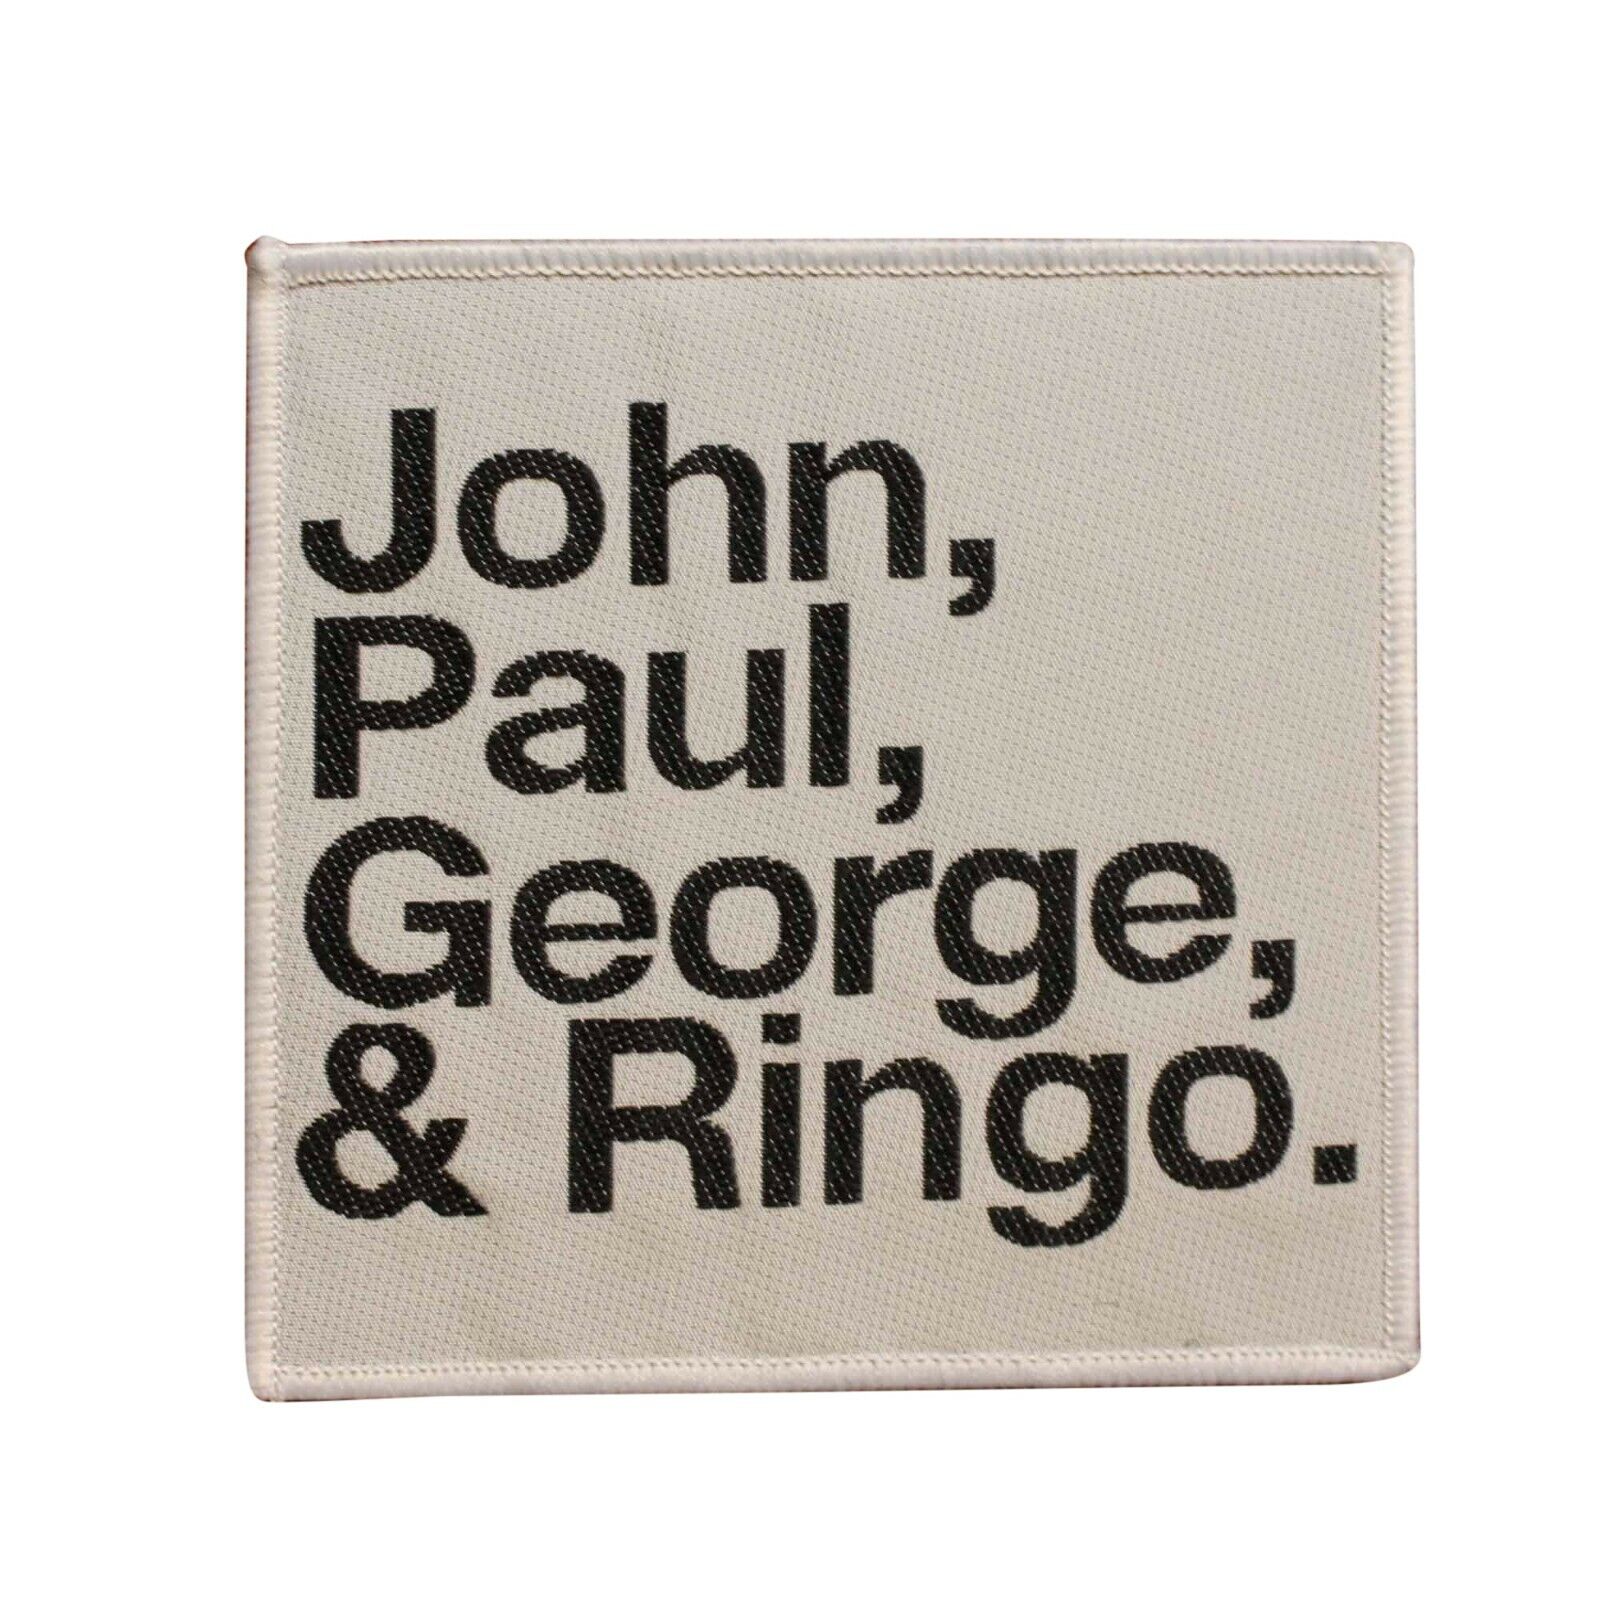 The Beatles John Paul George Ringo Woven Sew On Battle Patch - Licensed 073-k